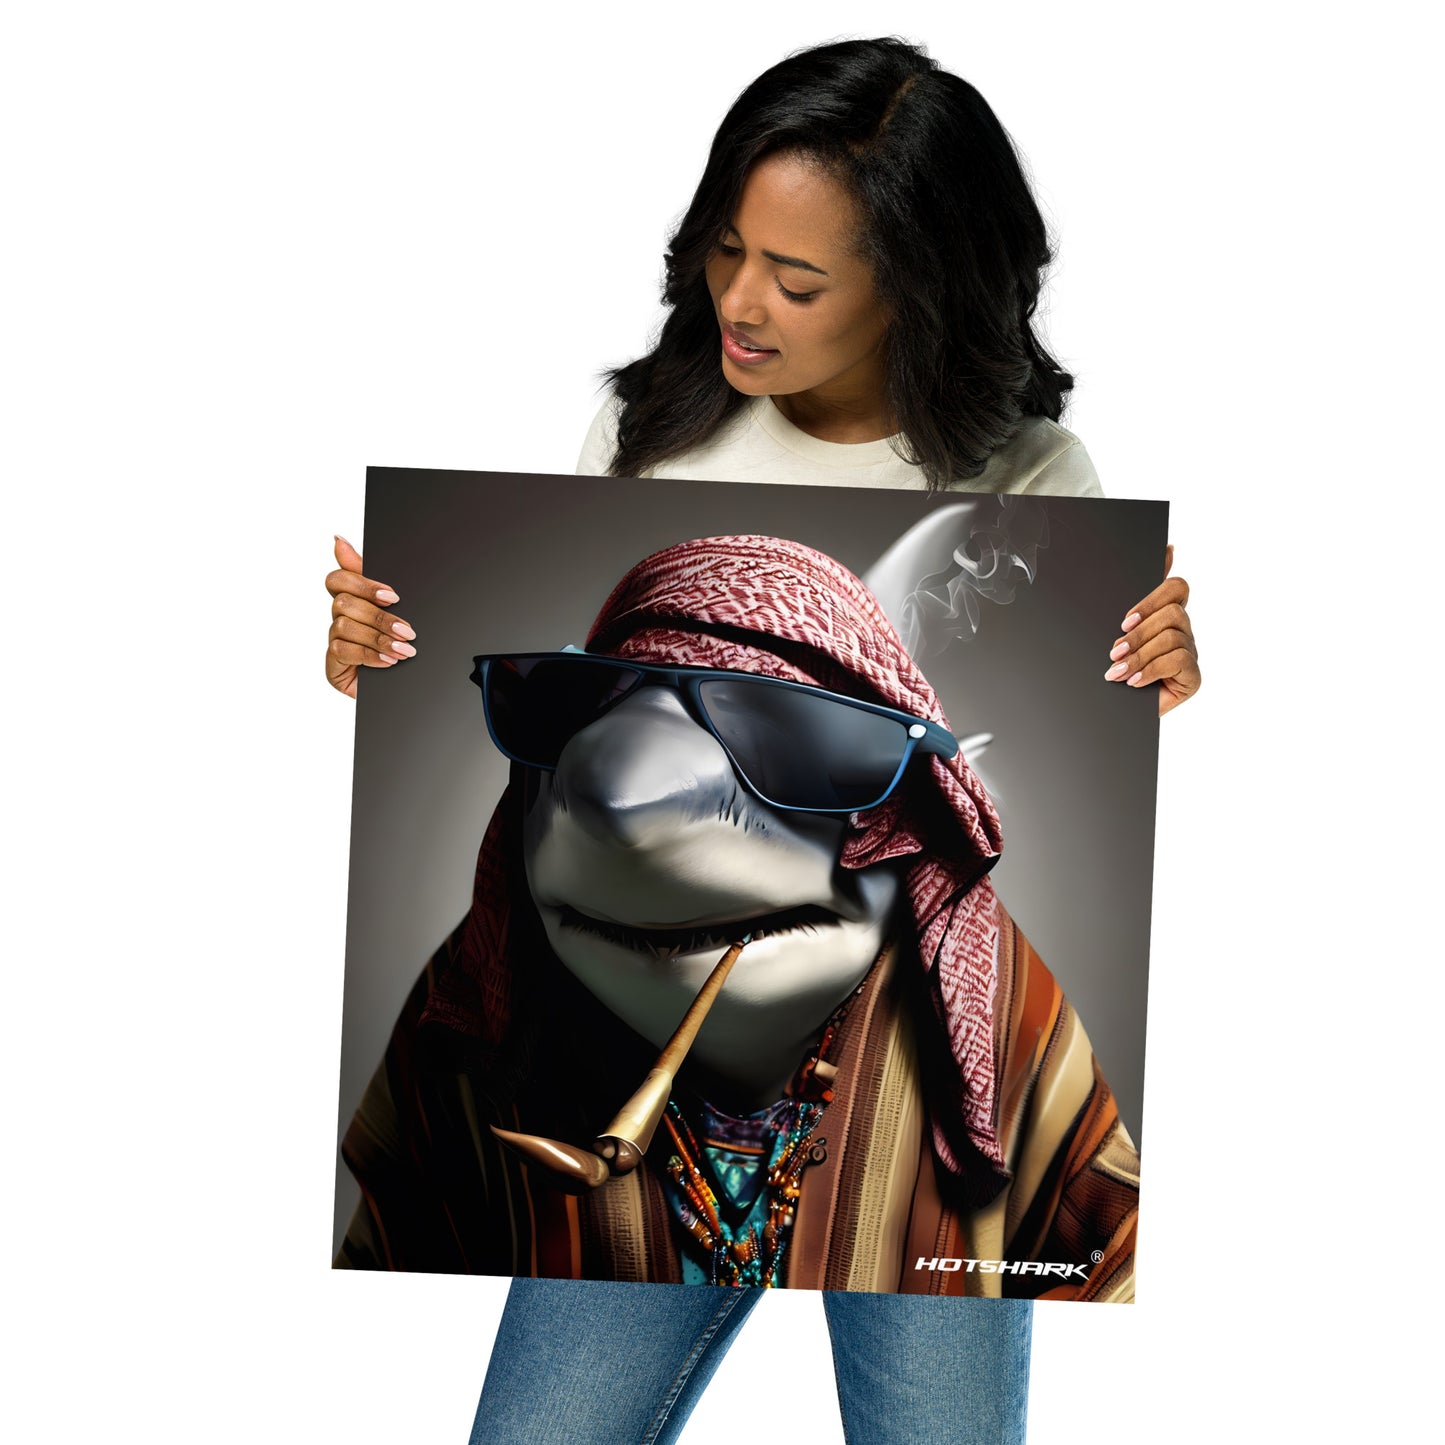 Taliban2 Shark - Poster